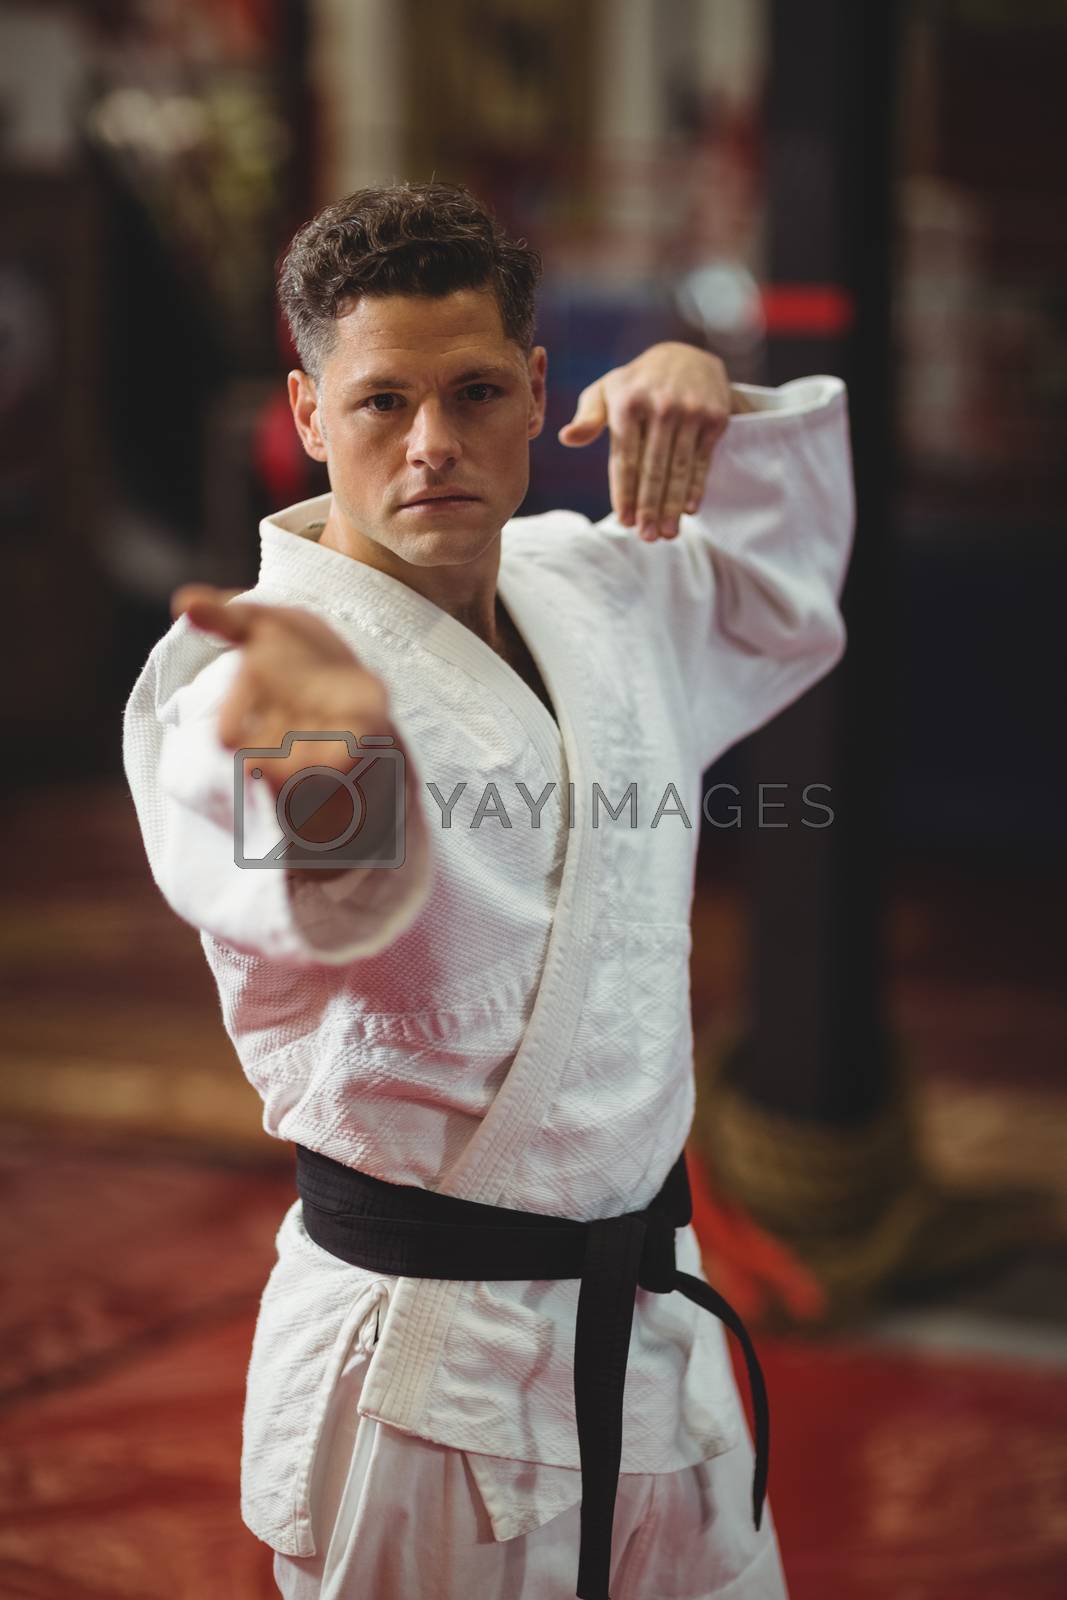 Royalty free image of Karate player performing karate stance by Wavebreakmedia